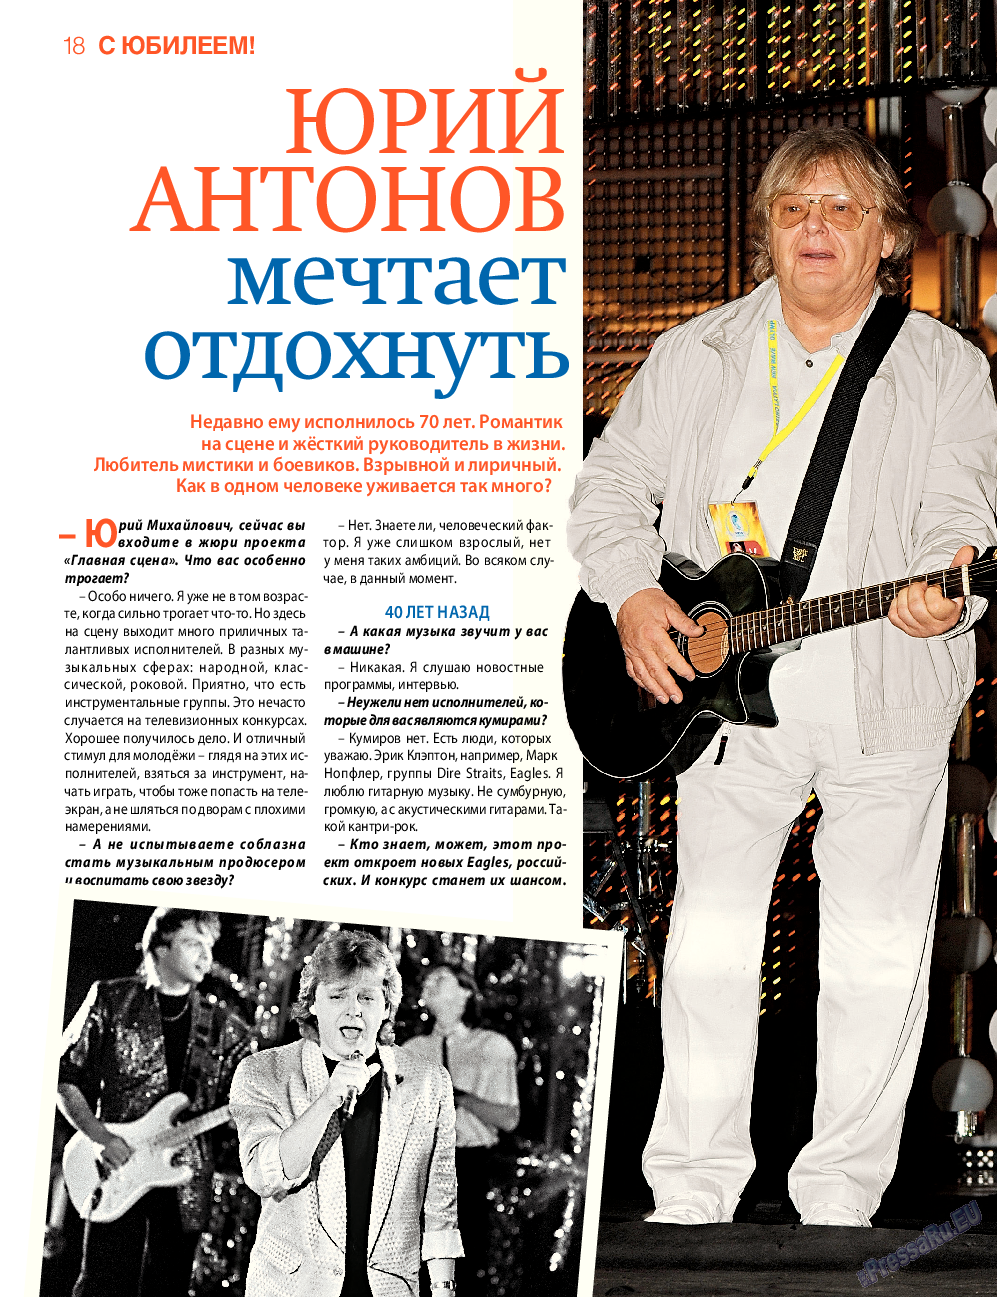 7плюс7я (журнал). 2015 год, номер 12, стр. 18